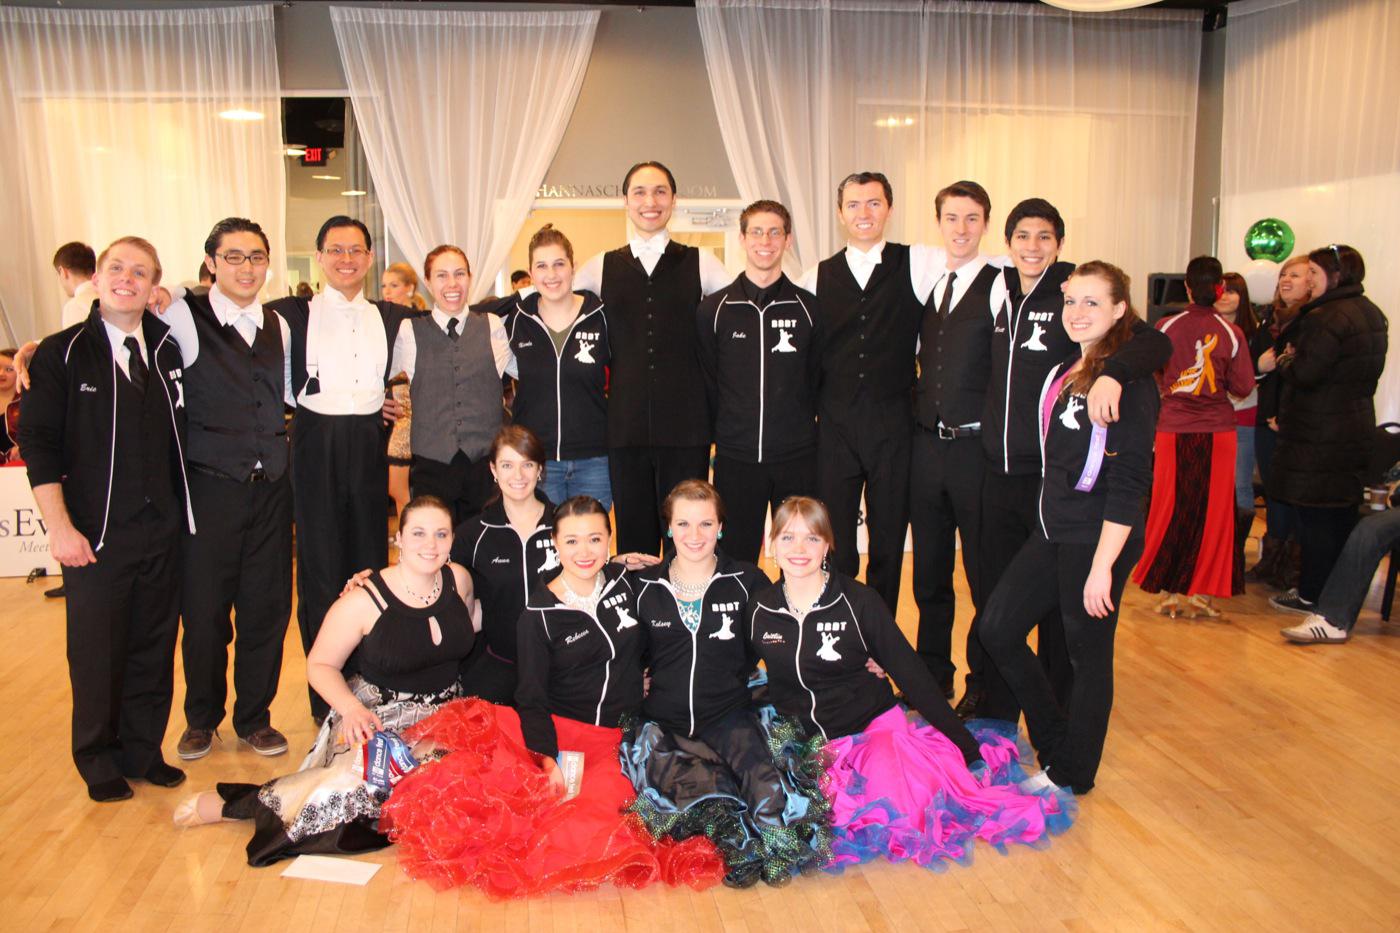 Madison's ballroom team